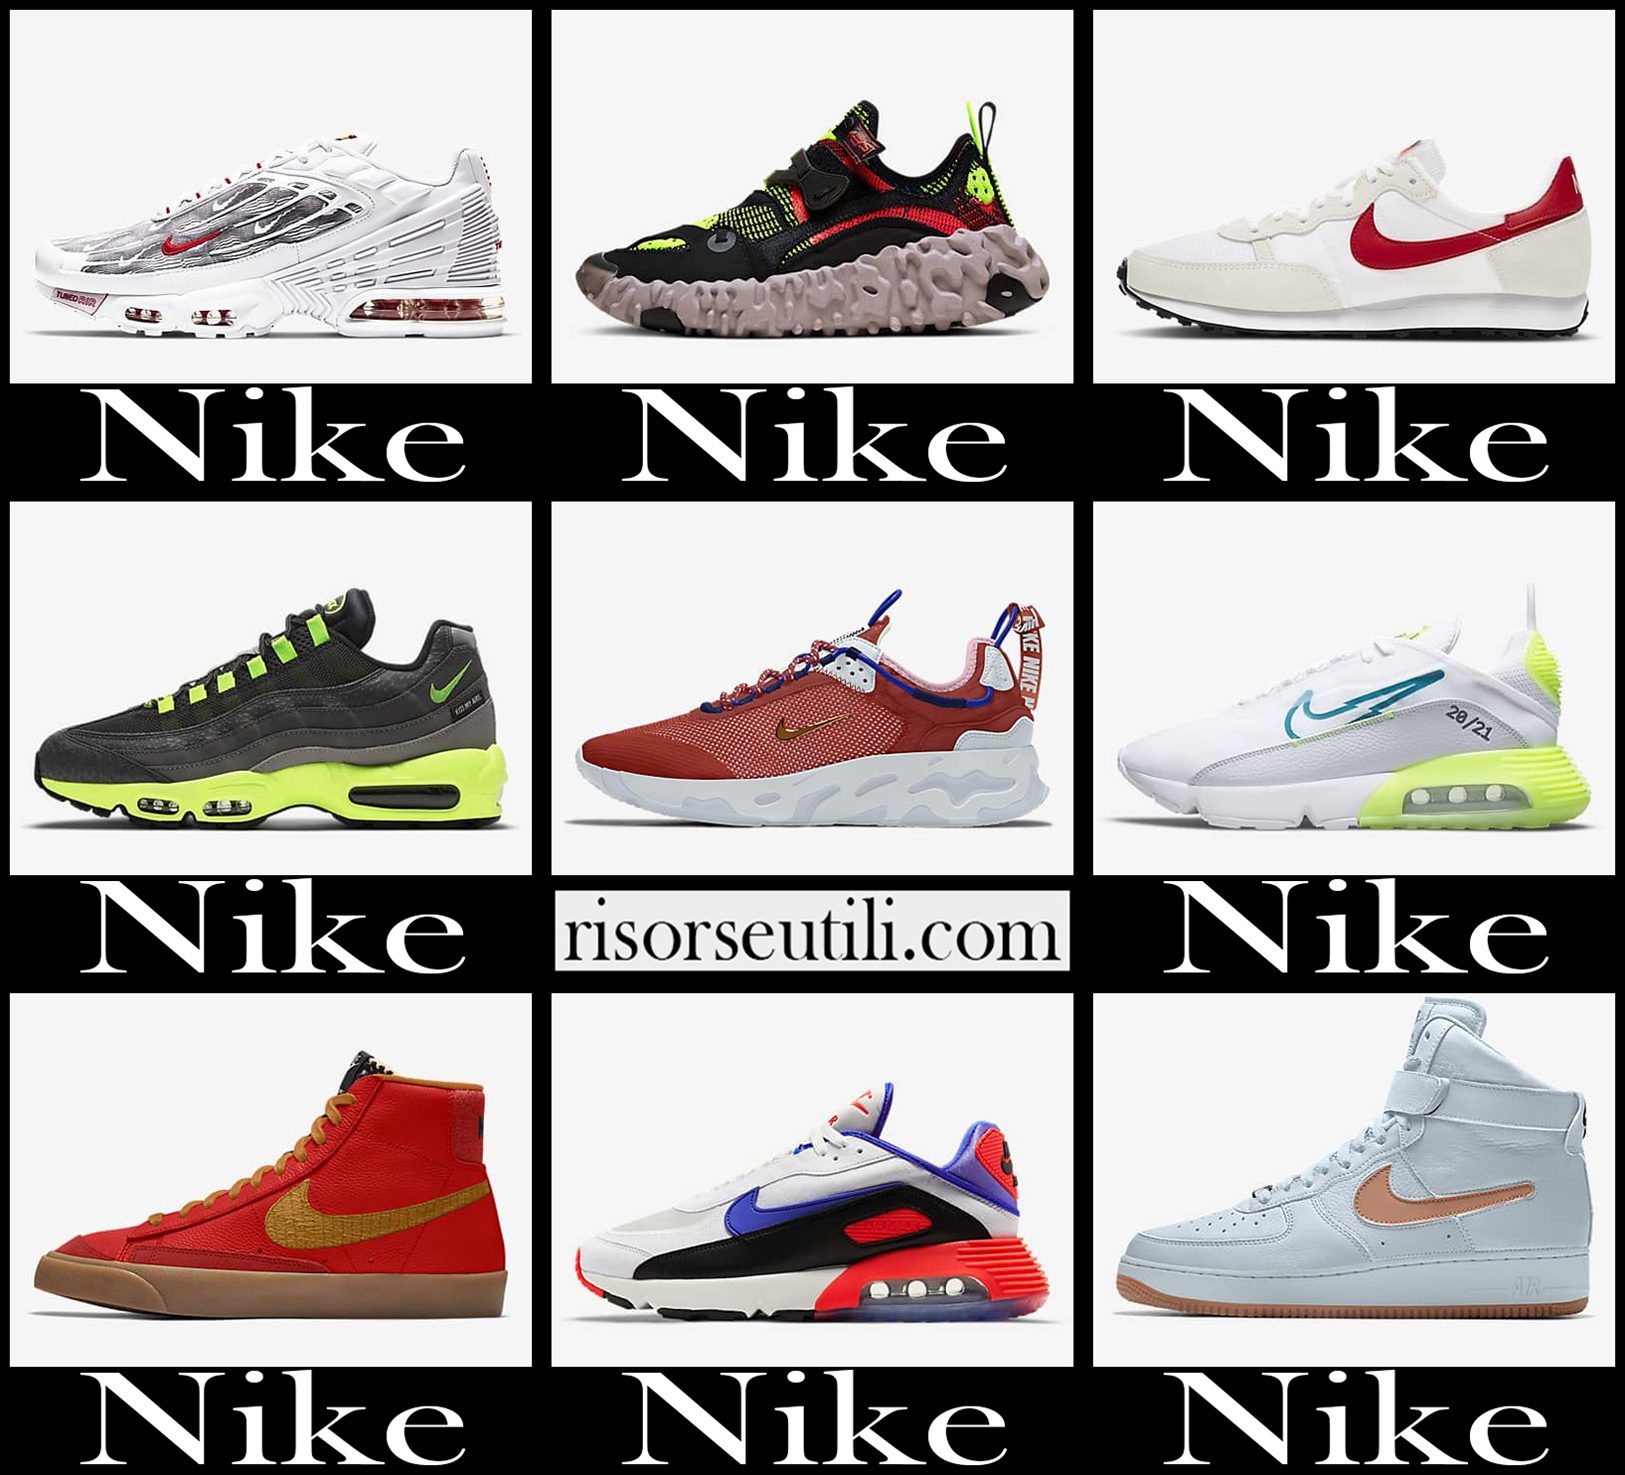 Nike News - Sneakers News